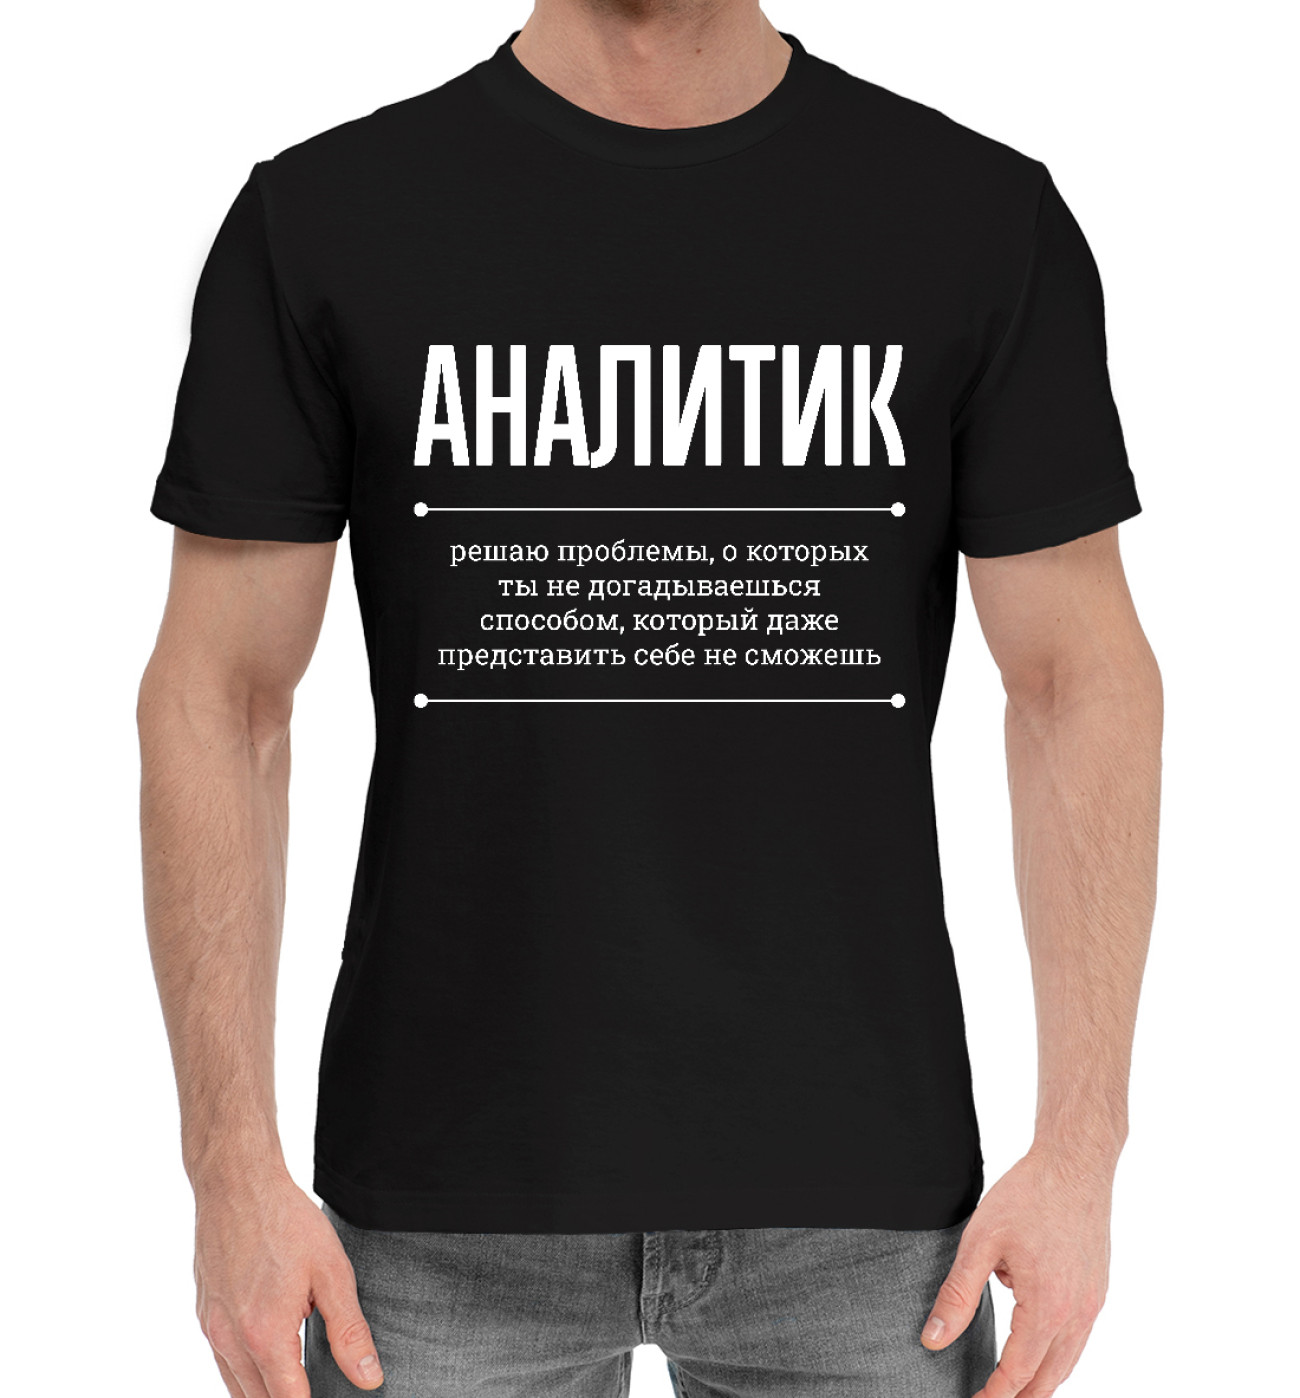 Мужская Хлопковая футболка Аналитик и Проблемы, артикул: ITT-482720-hfu-2